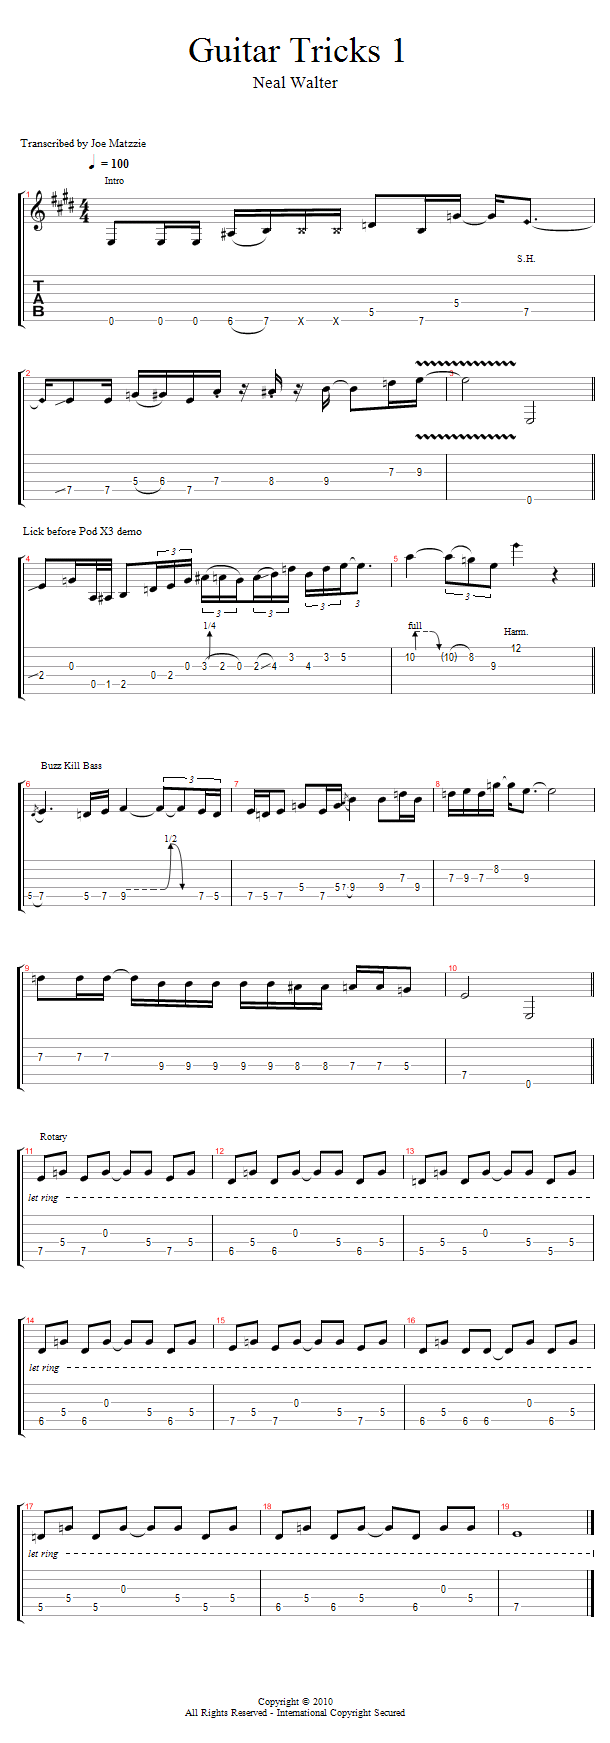 Guitar Tricks 1: Pod X3 Live Giveaway song notation